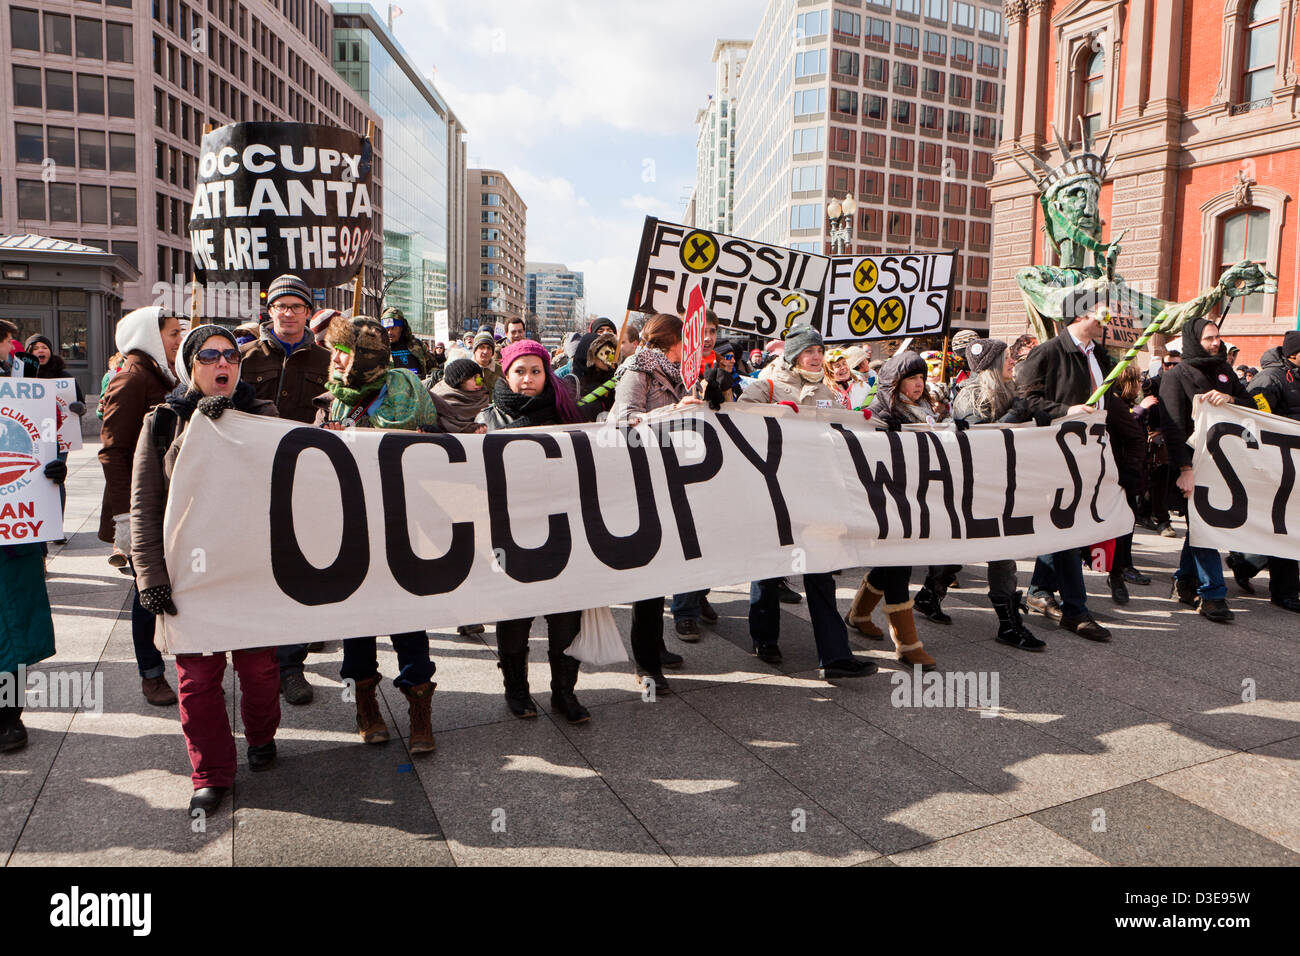 Occupy Wall Street protesters - Washington, DC USA Stock Photo